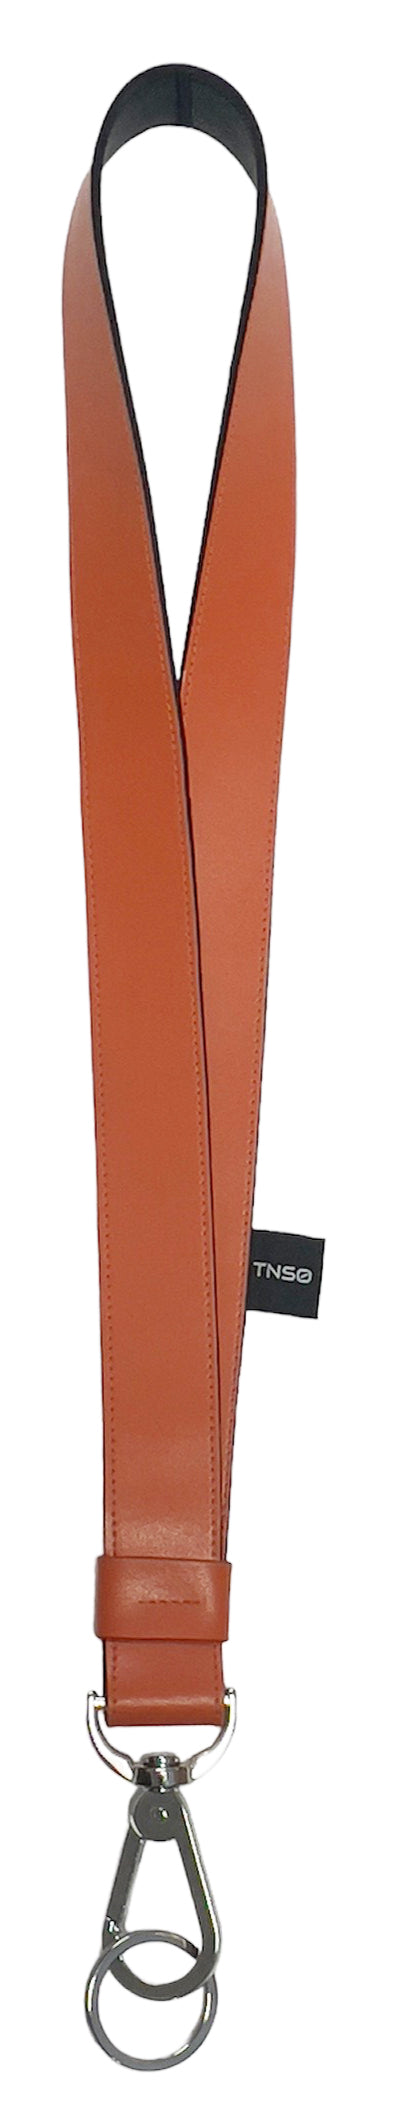 TNSO portachiavi Leather Lanyard Limited Edition orange